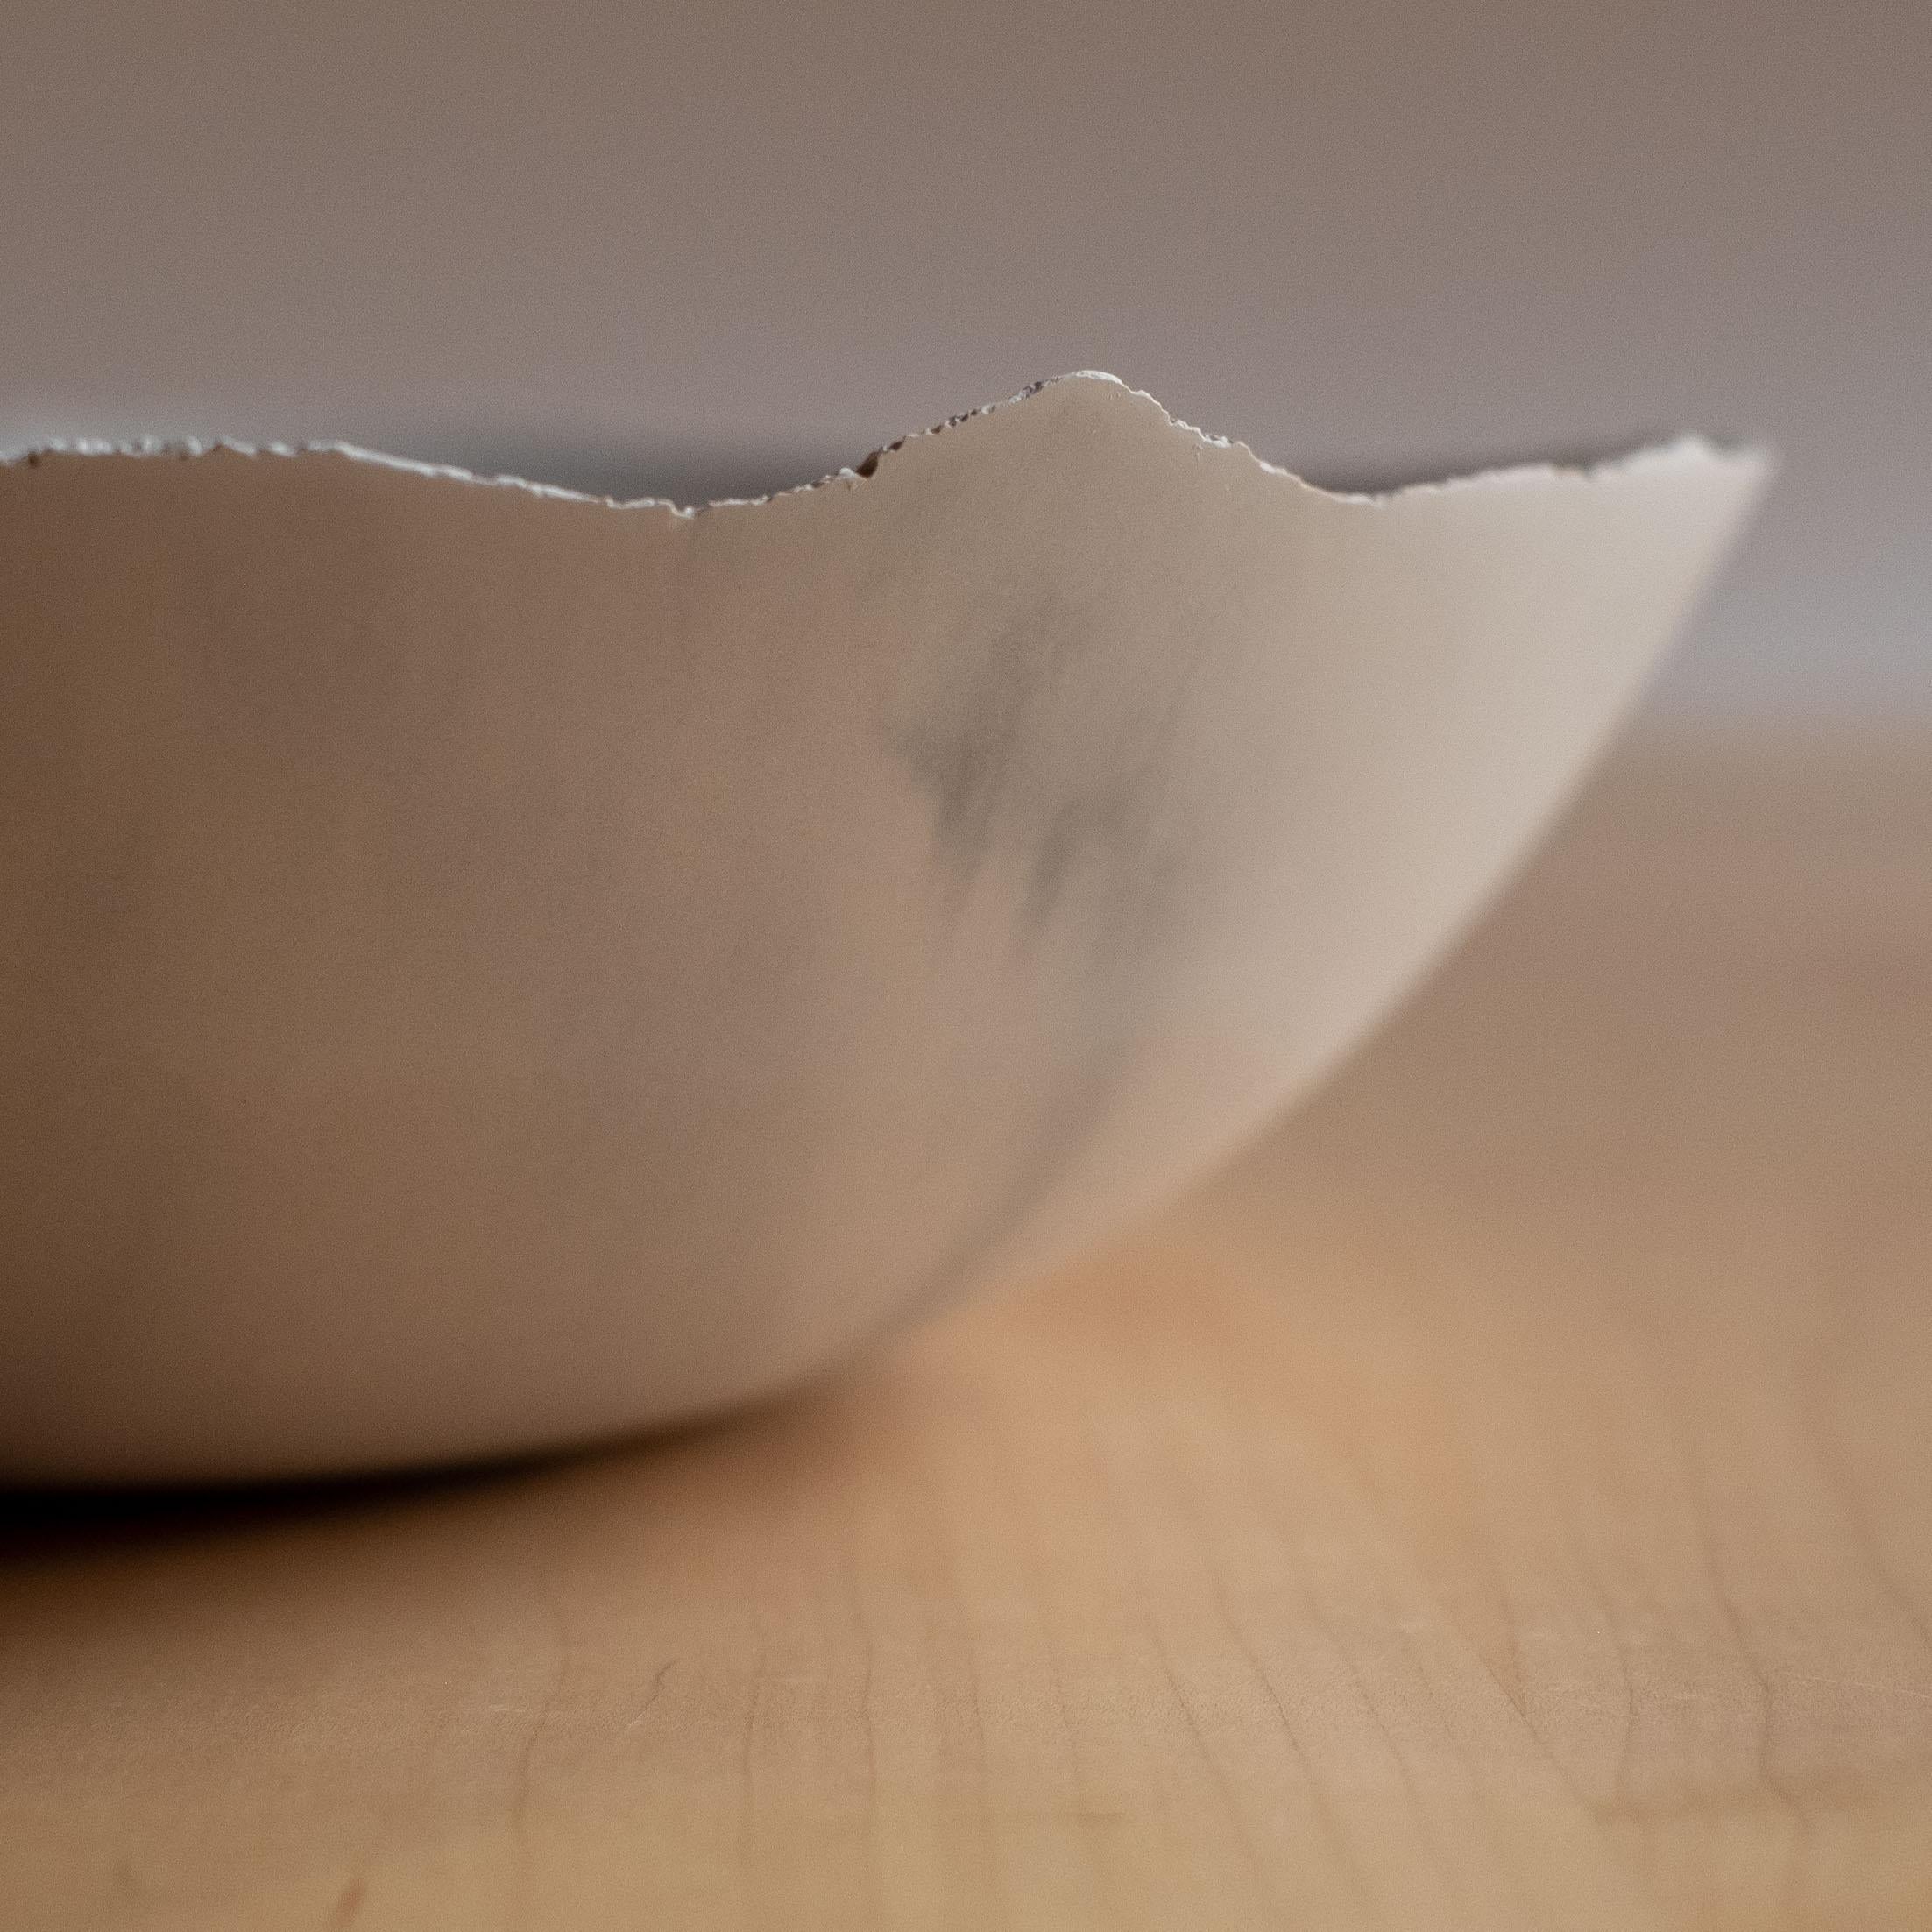 Handmade Cast Concrete Bowl in Grey by UMÉ Studio For Sale 5